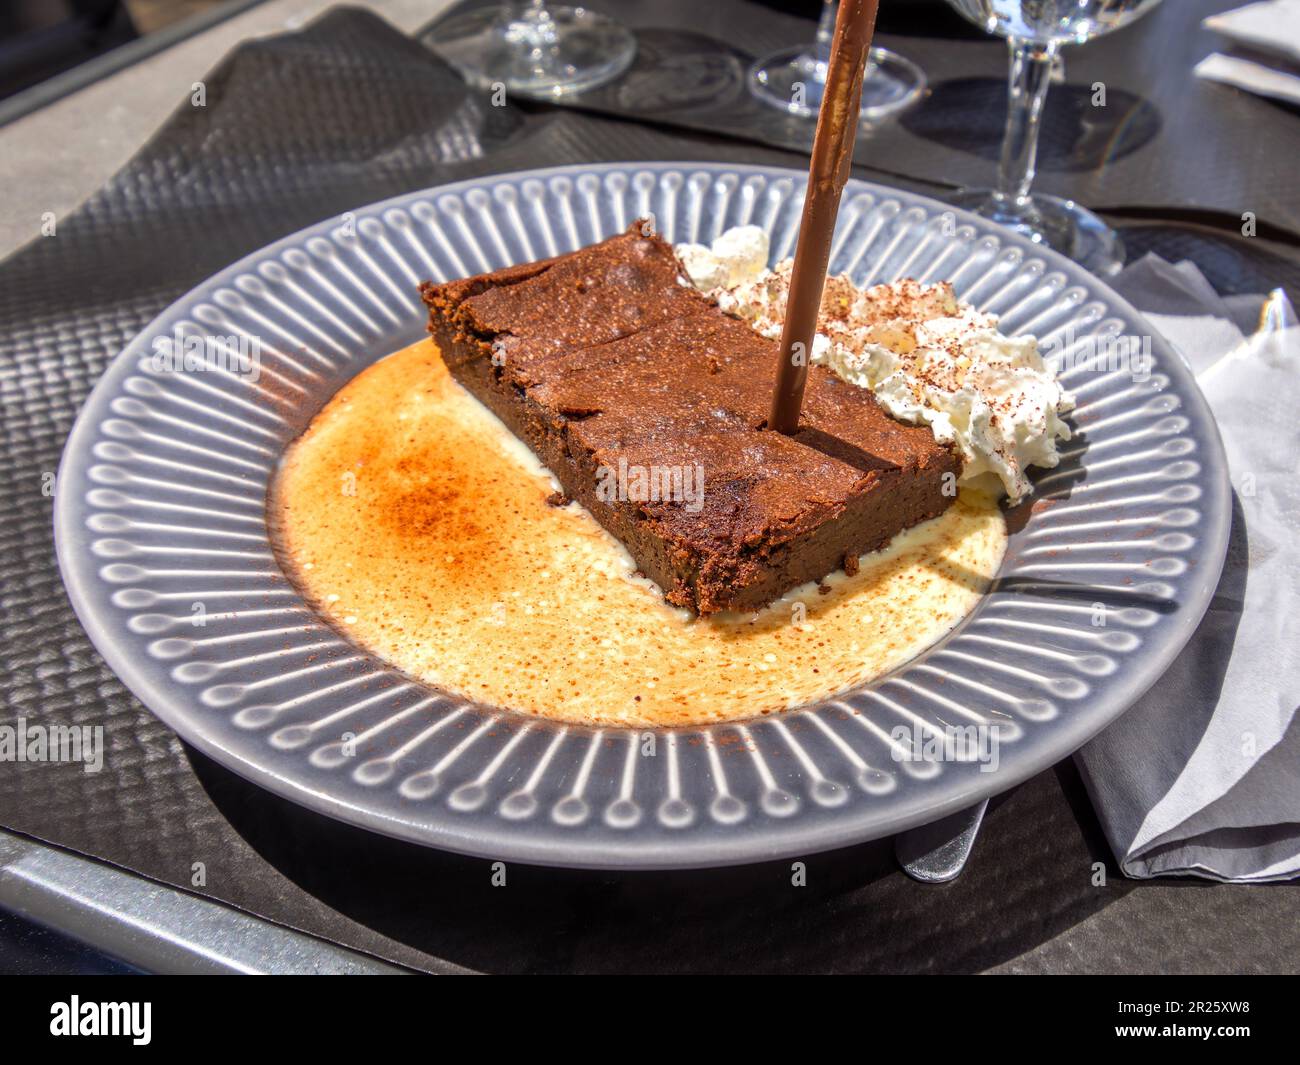 Chocolate fondant and Creme Anglaise dessert - France Stock Photo